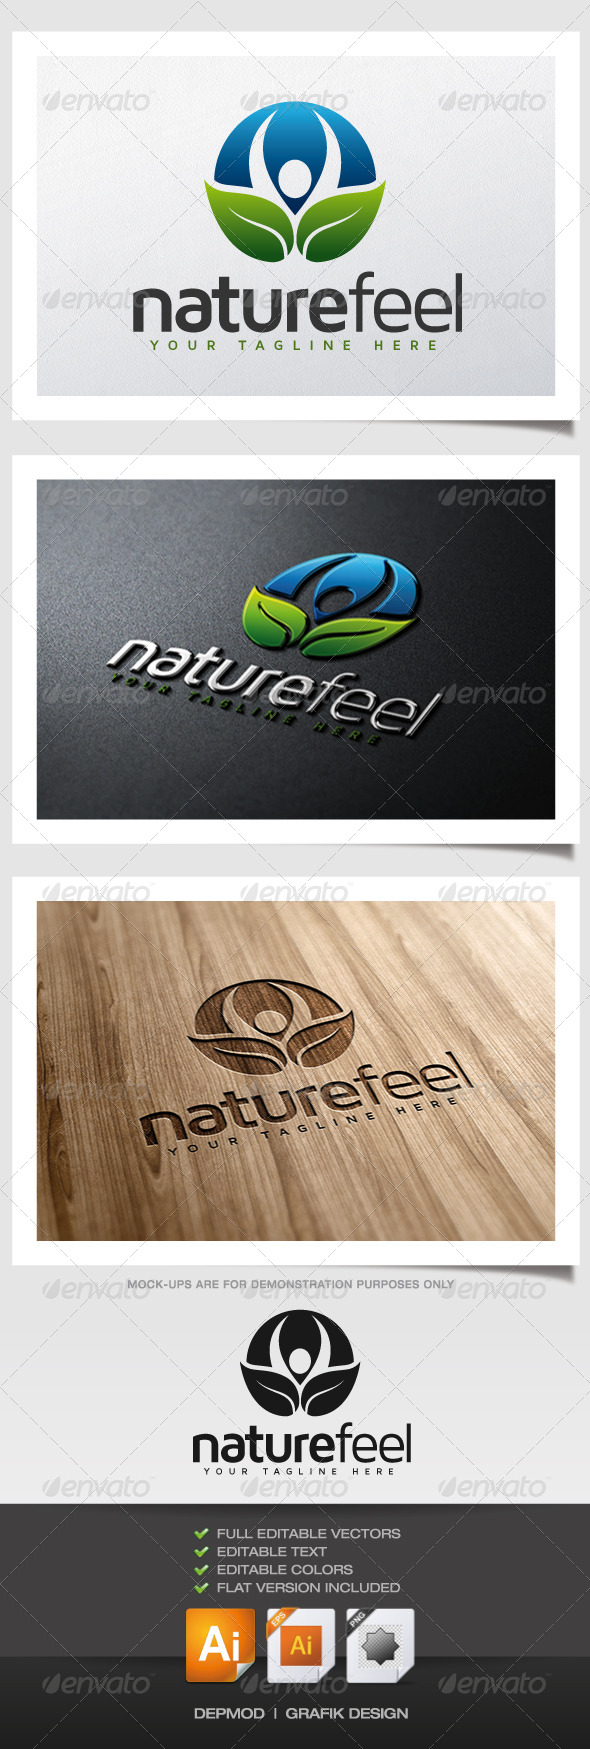 Nature Feel Logo